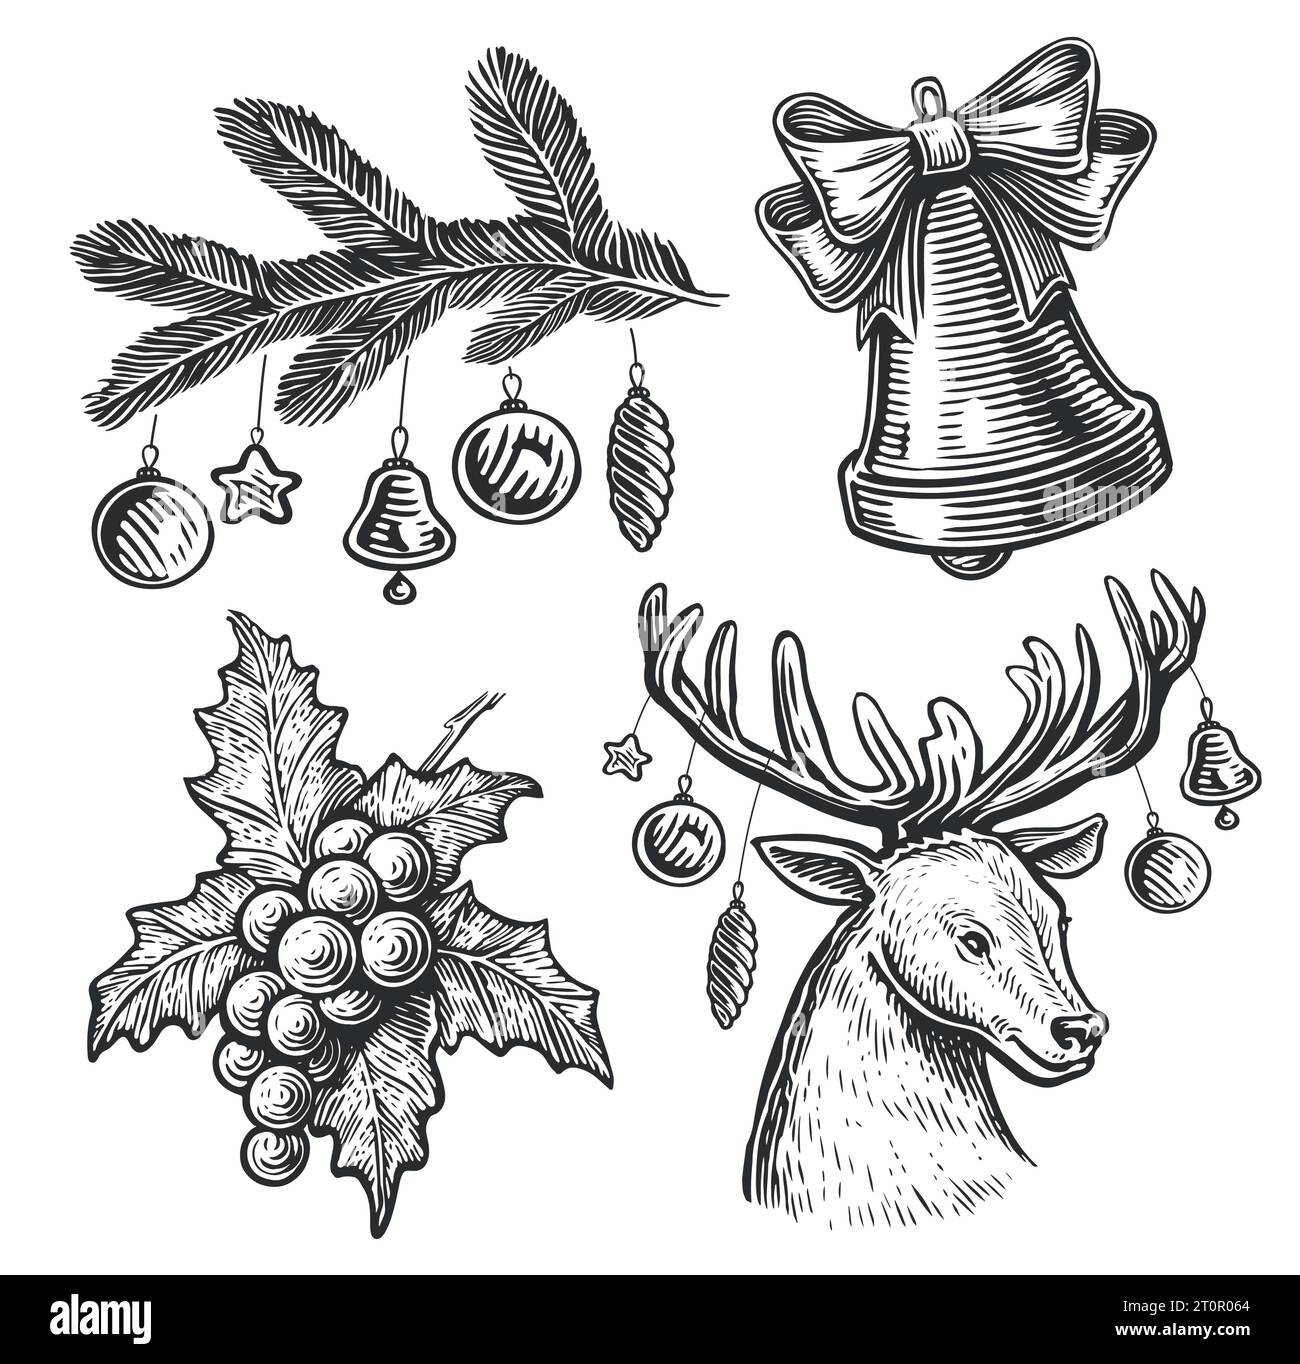 Set natalizio illustrazioni vettoriali vintage stile di incisione Illustrazione Vettoriale